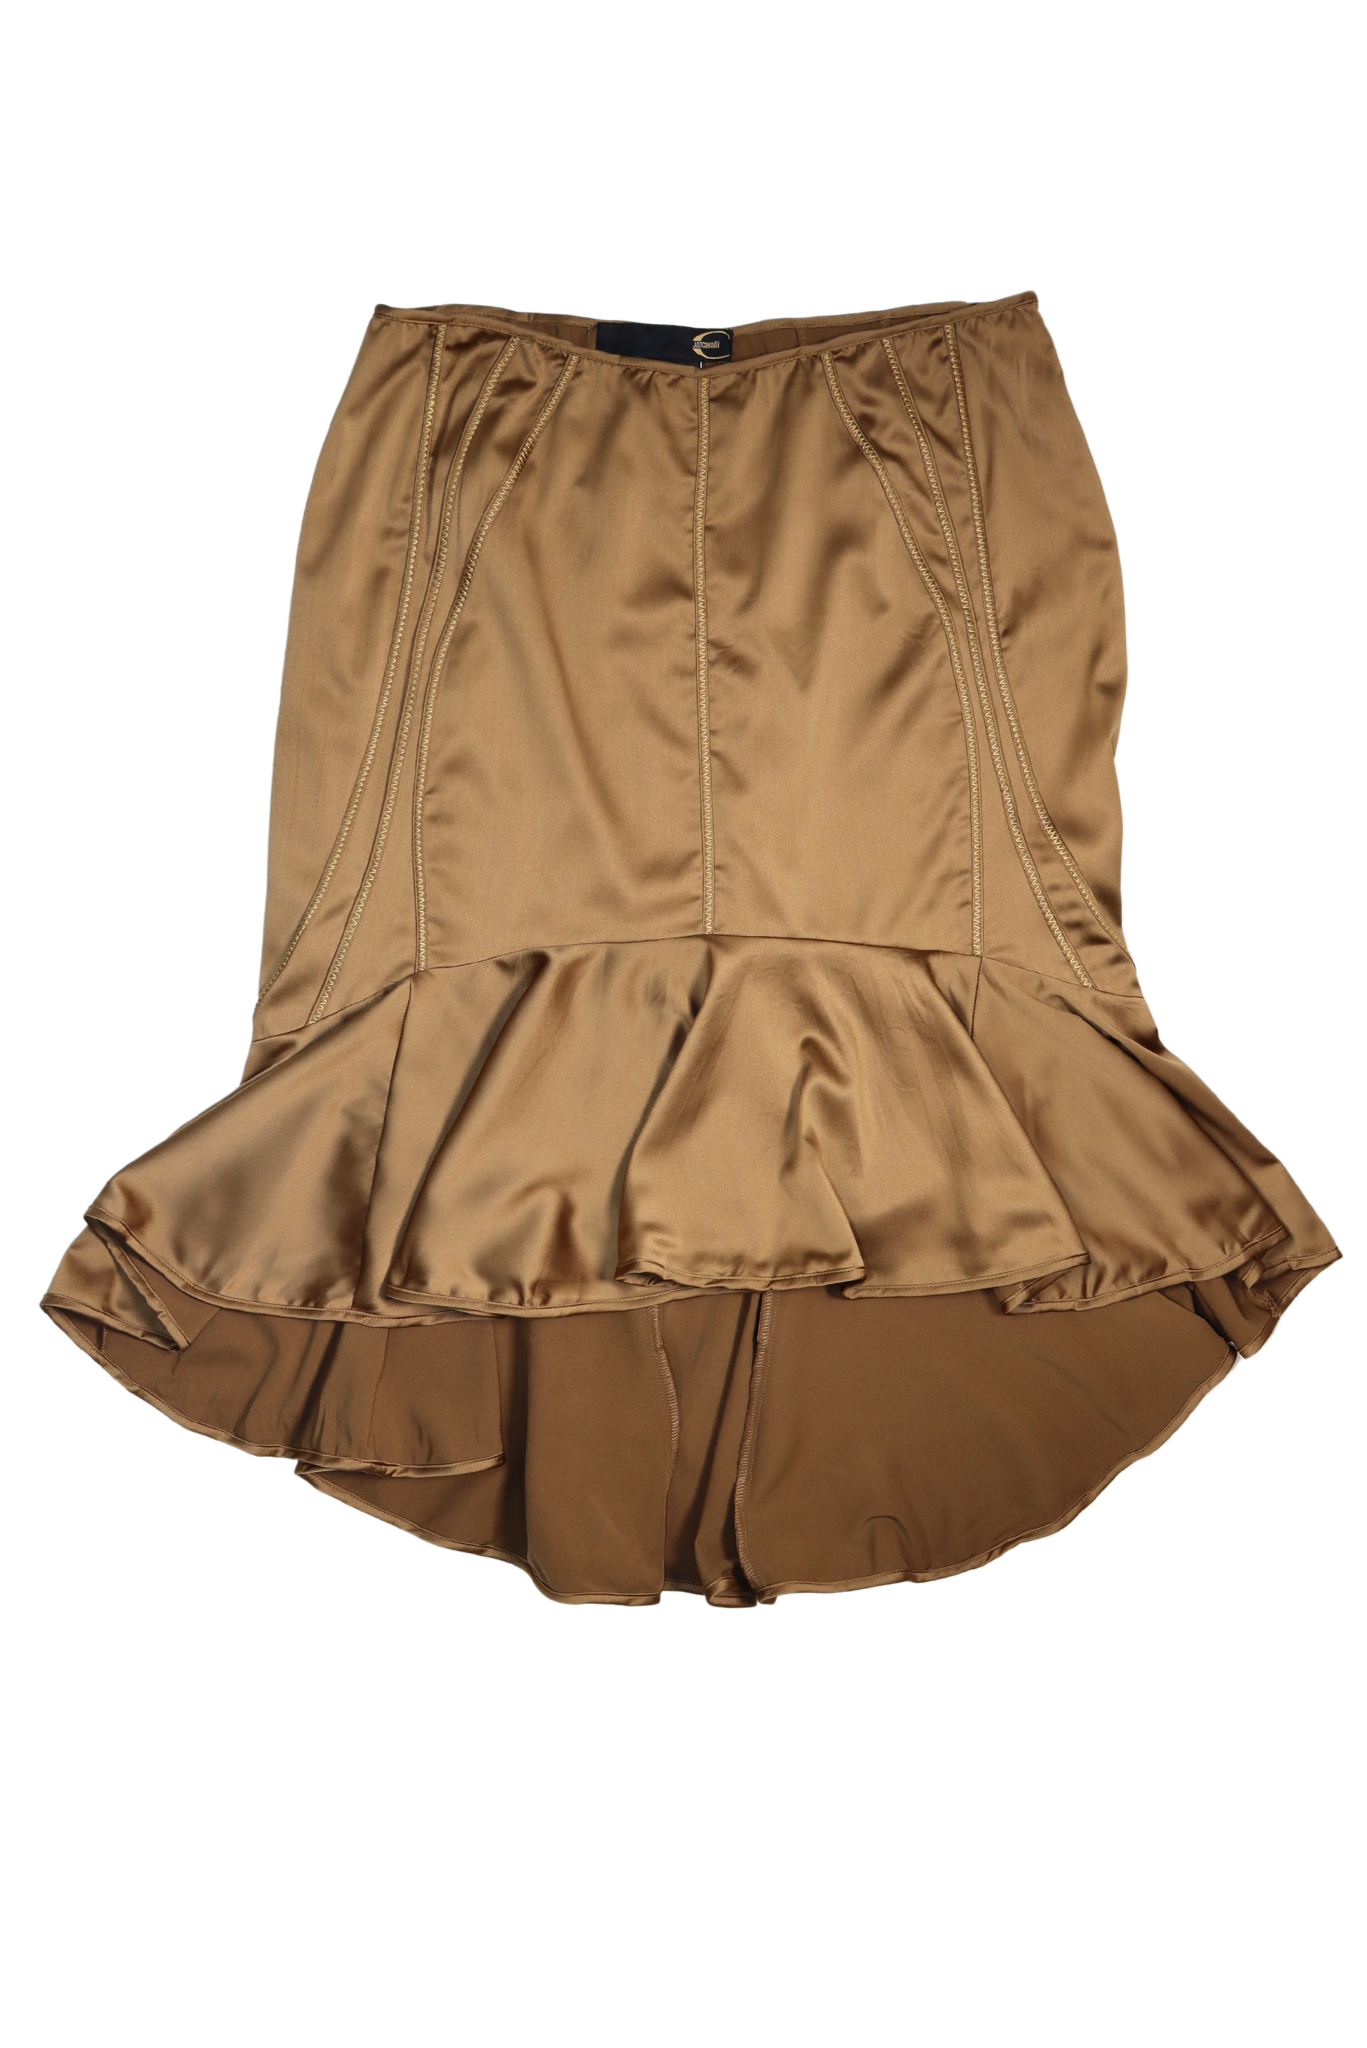 Just Cavalli Satin Skirt with Ruffle Trim